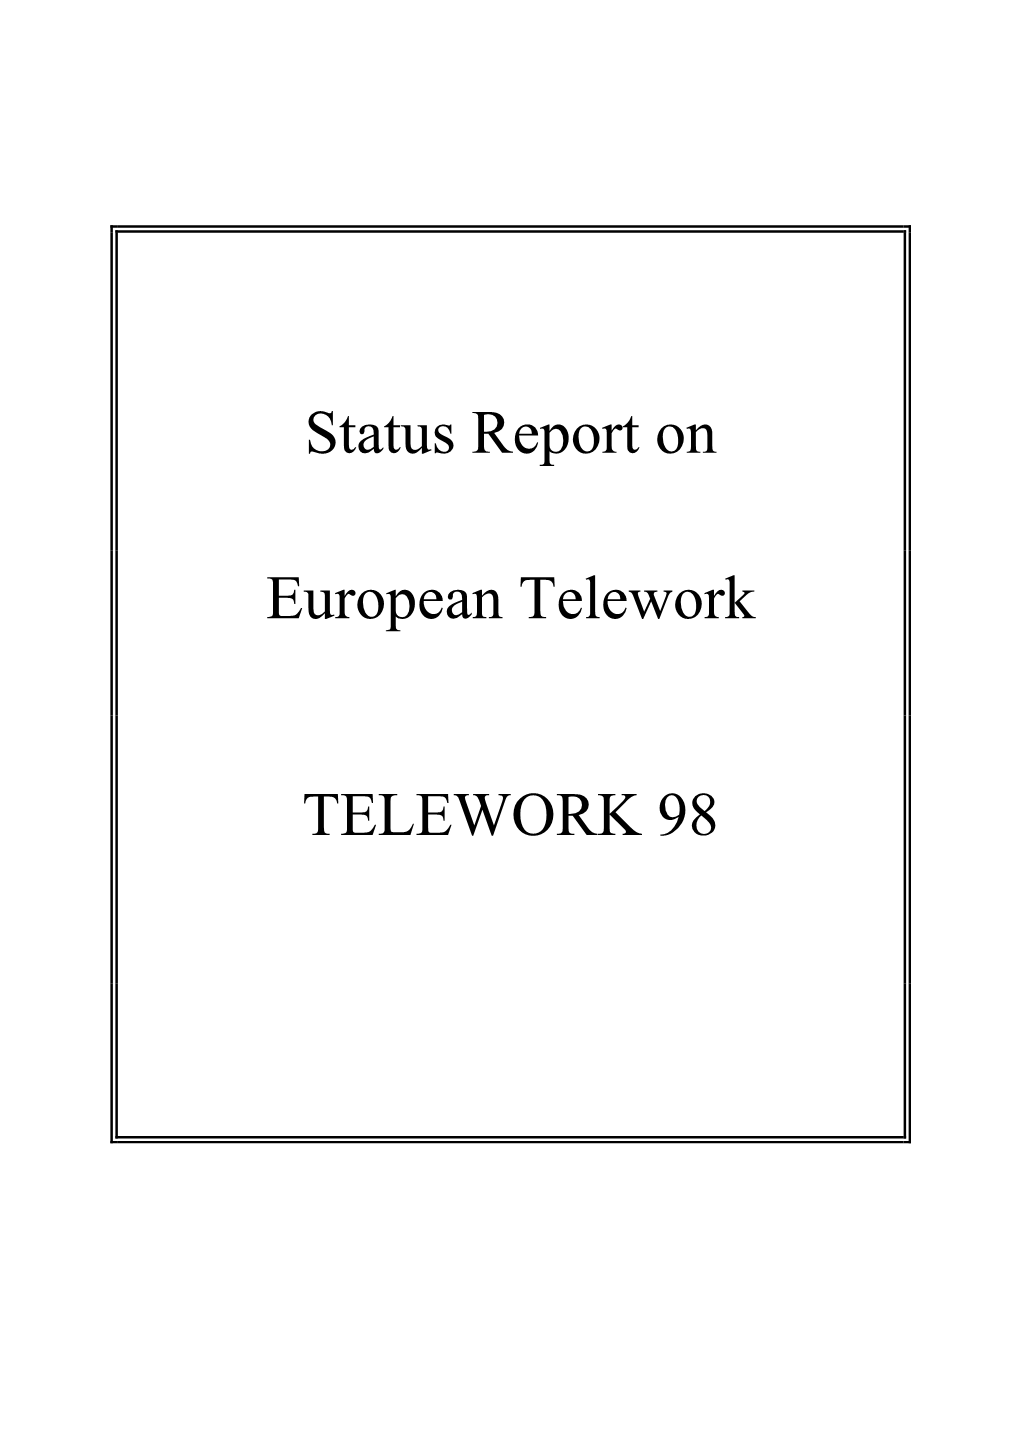 The European Status Report on Telework